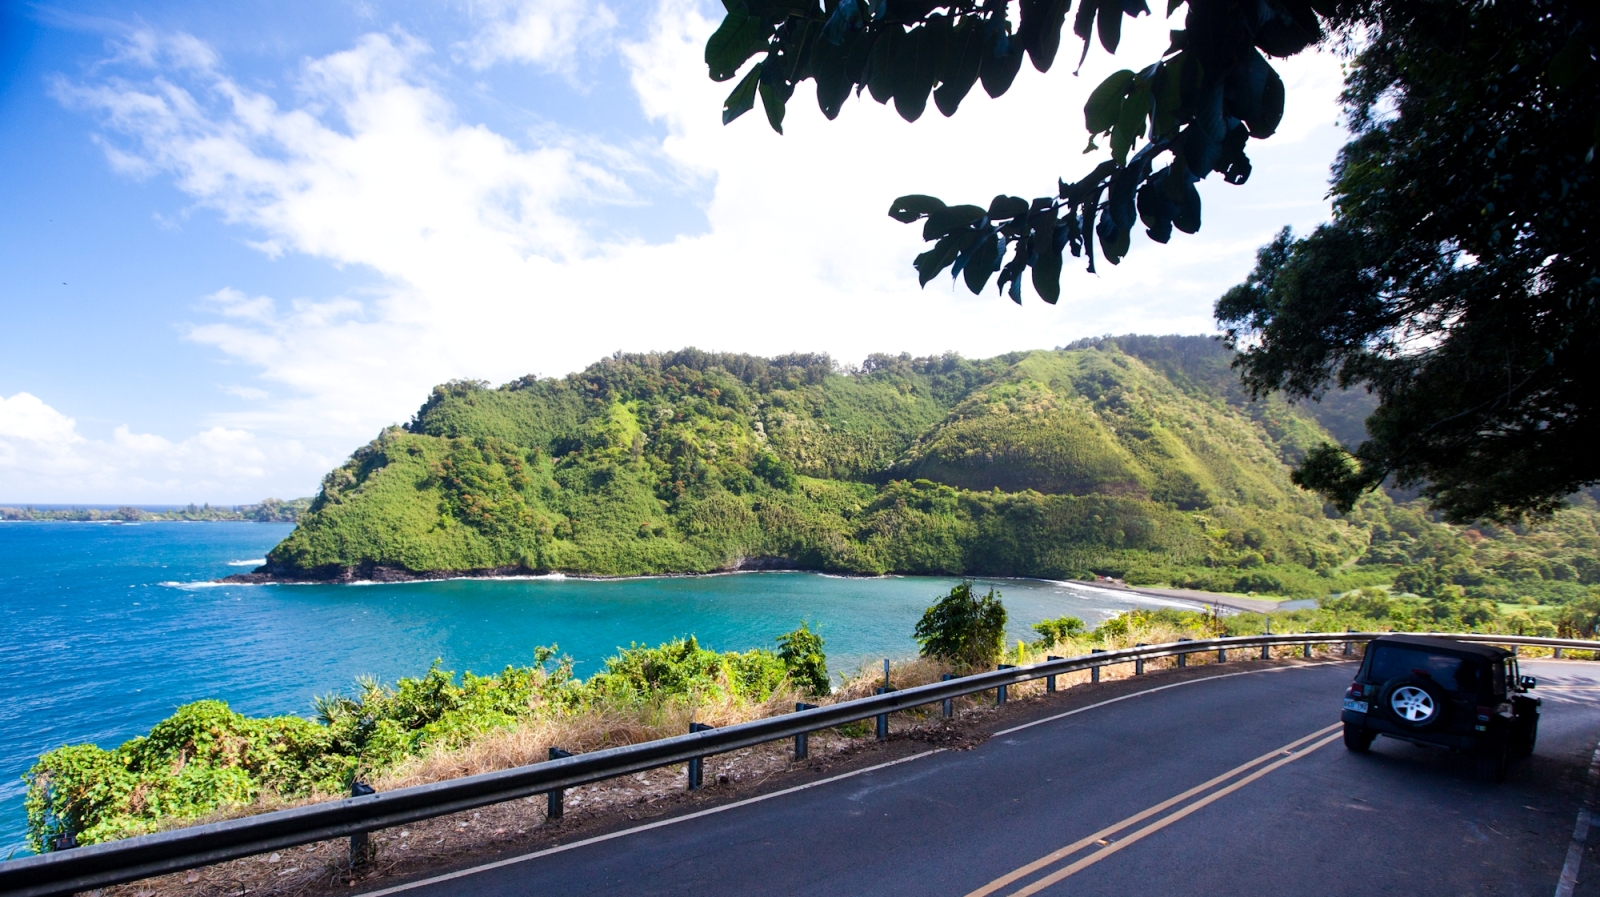 Hawaii Tourism Authority (HTA) / Tor Johnson